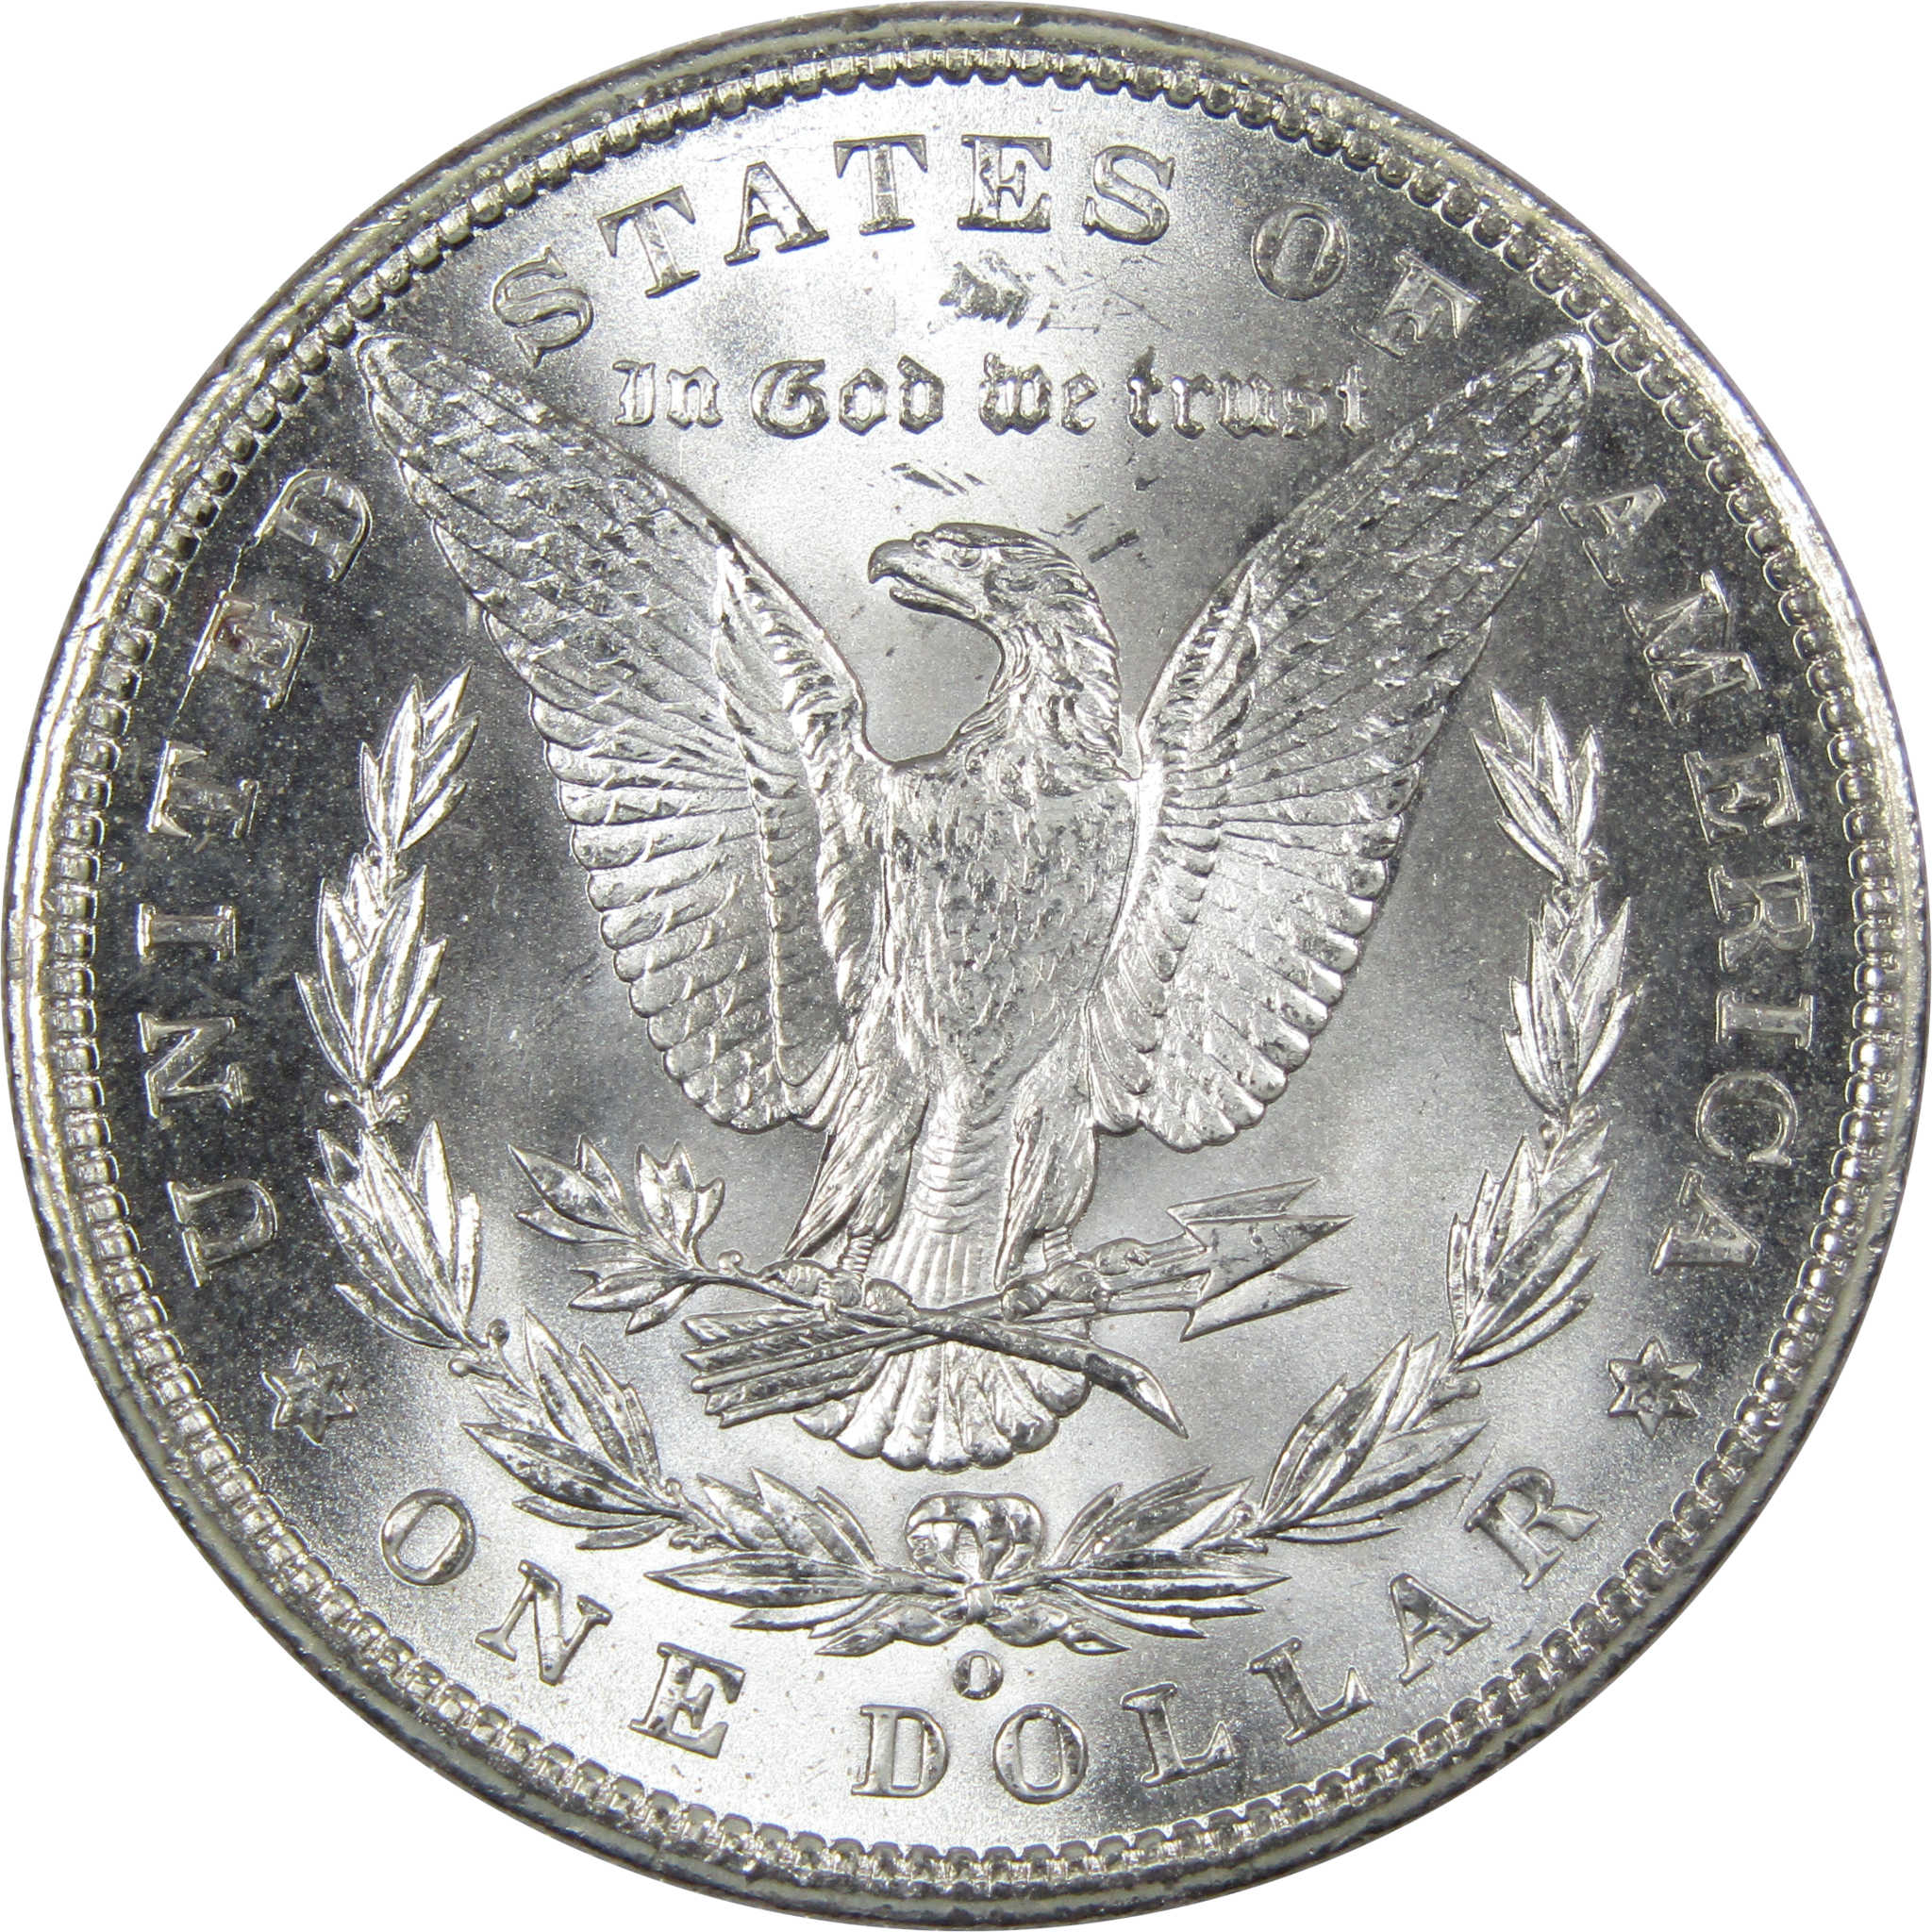 1900 O Morgan Dollar BU Uncirculated Mint State 90% Silver SKU:IPC9739 - Morgan coin - Morgan silver dollar - Morgan silver dollar for sale - Profile Coins &amp; Collectibles